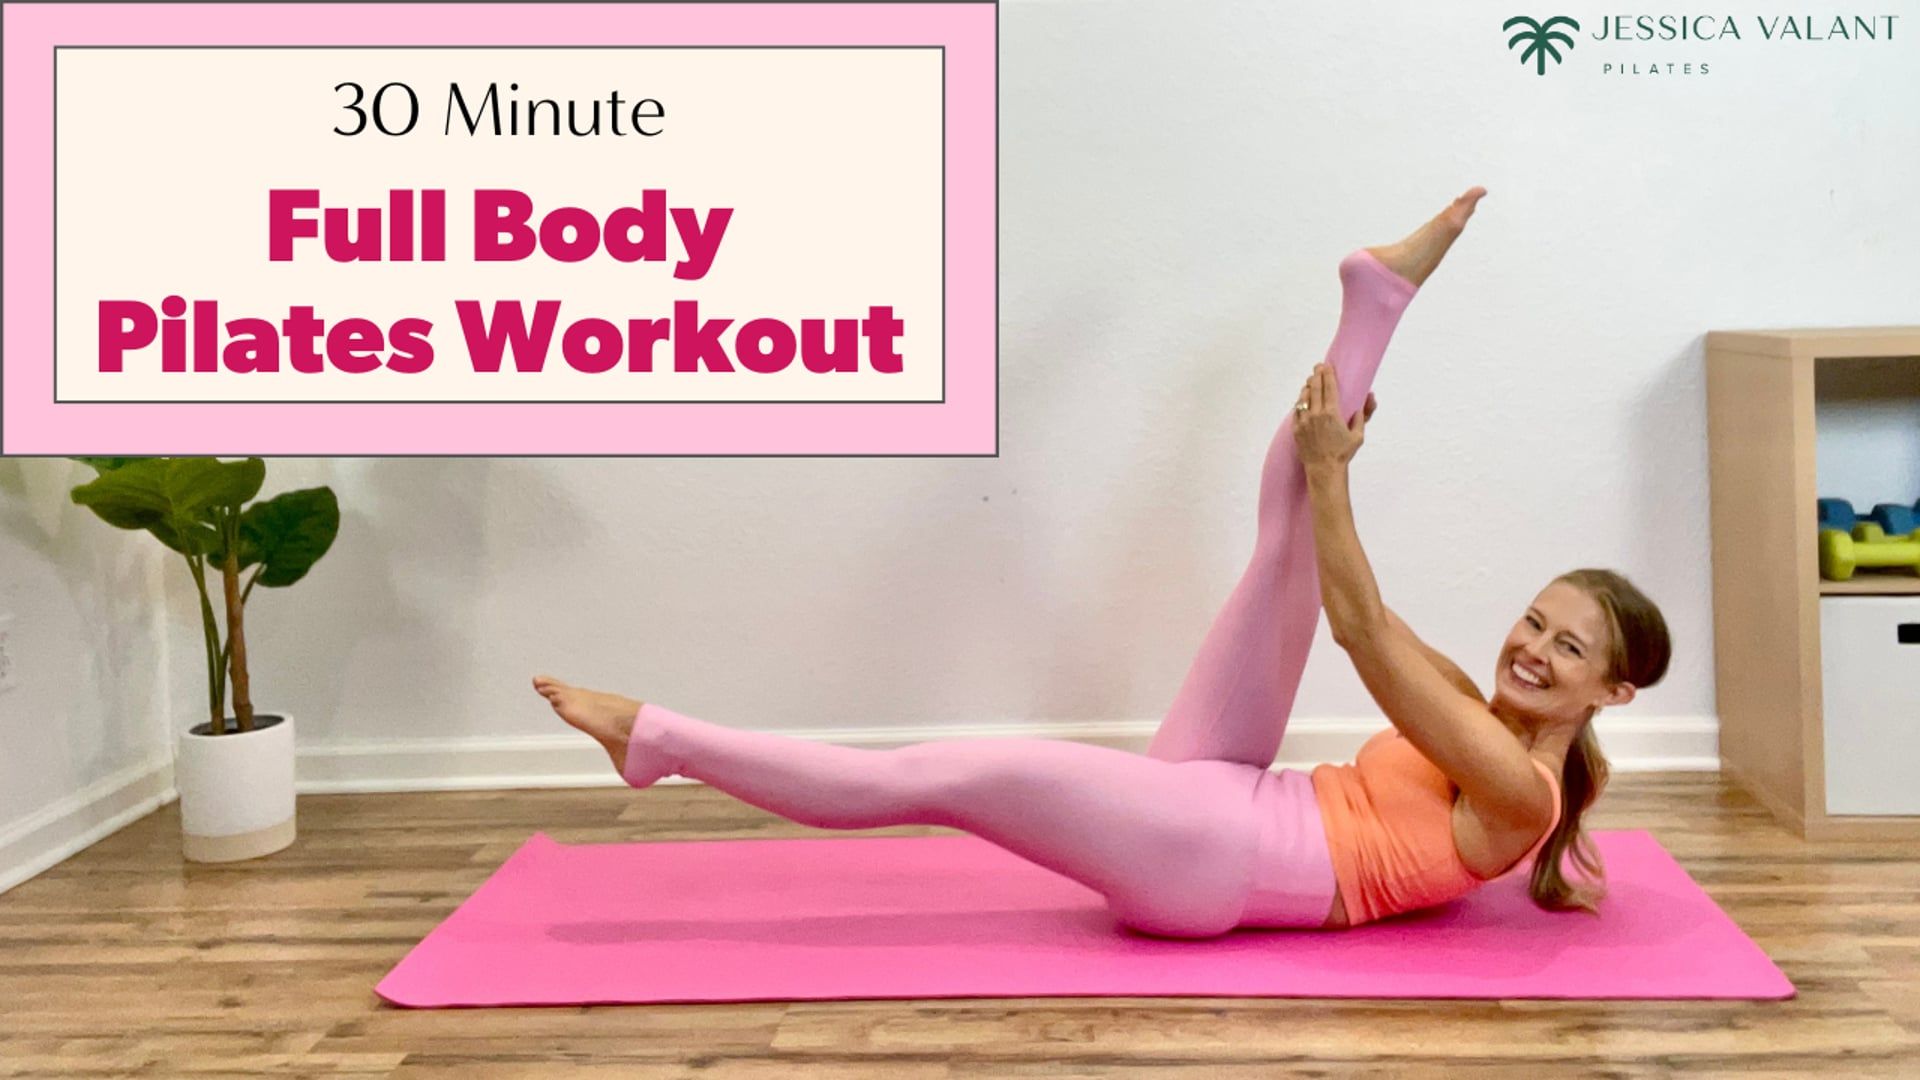 10 Minute Advanced Pilates Workout - Full Body Pilates 